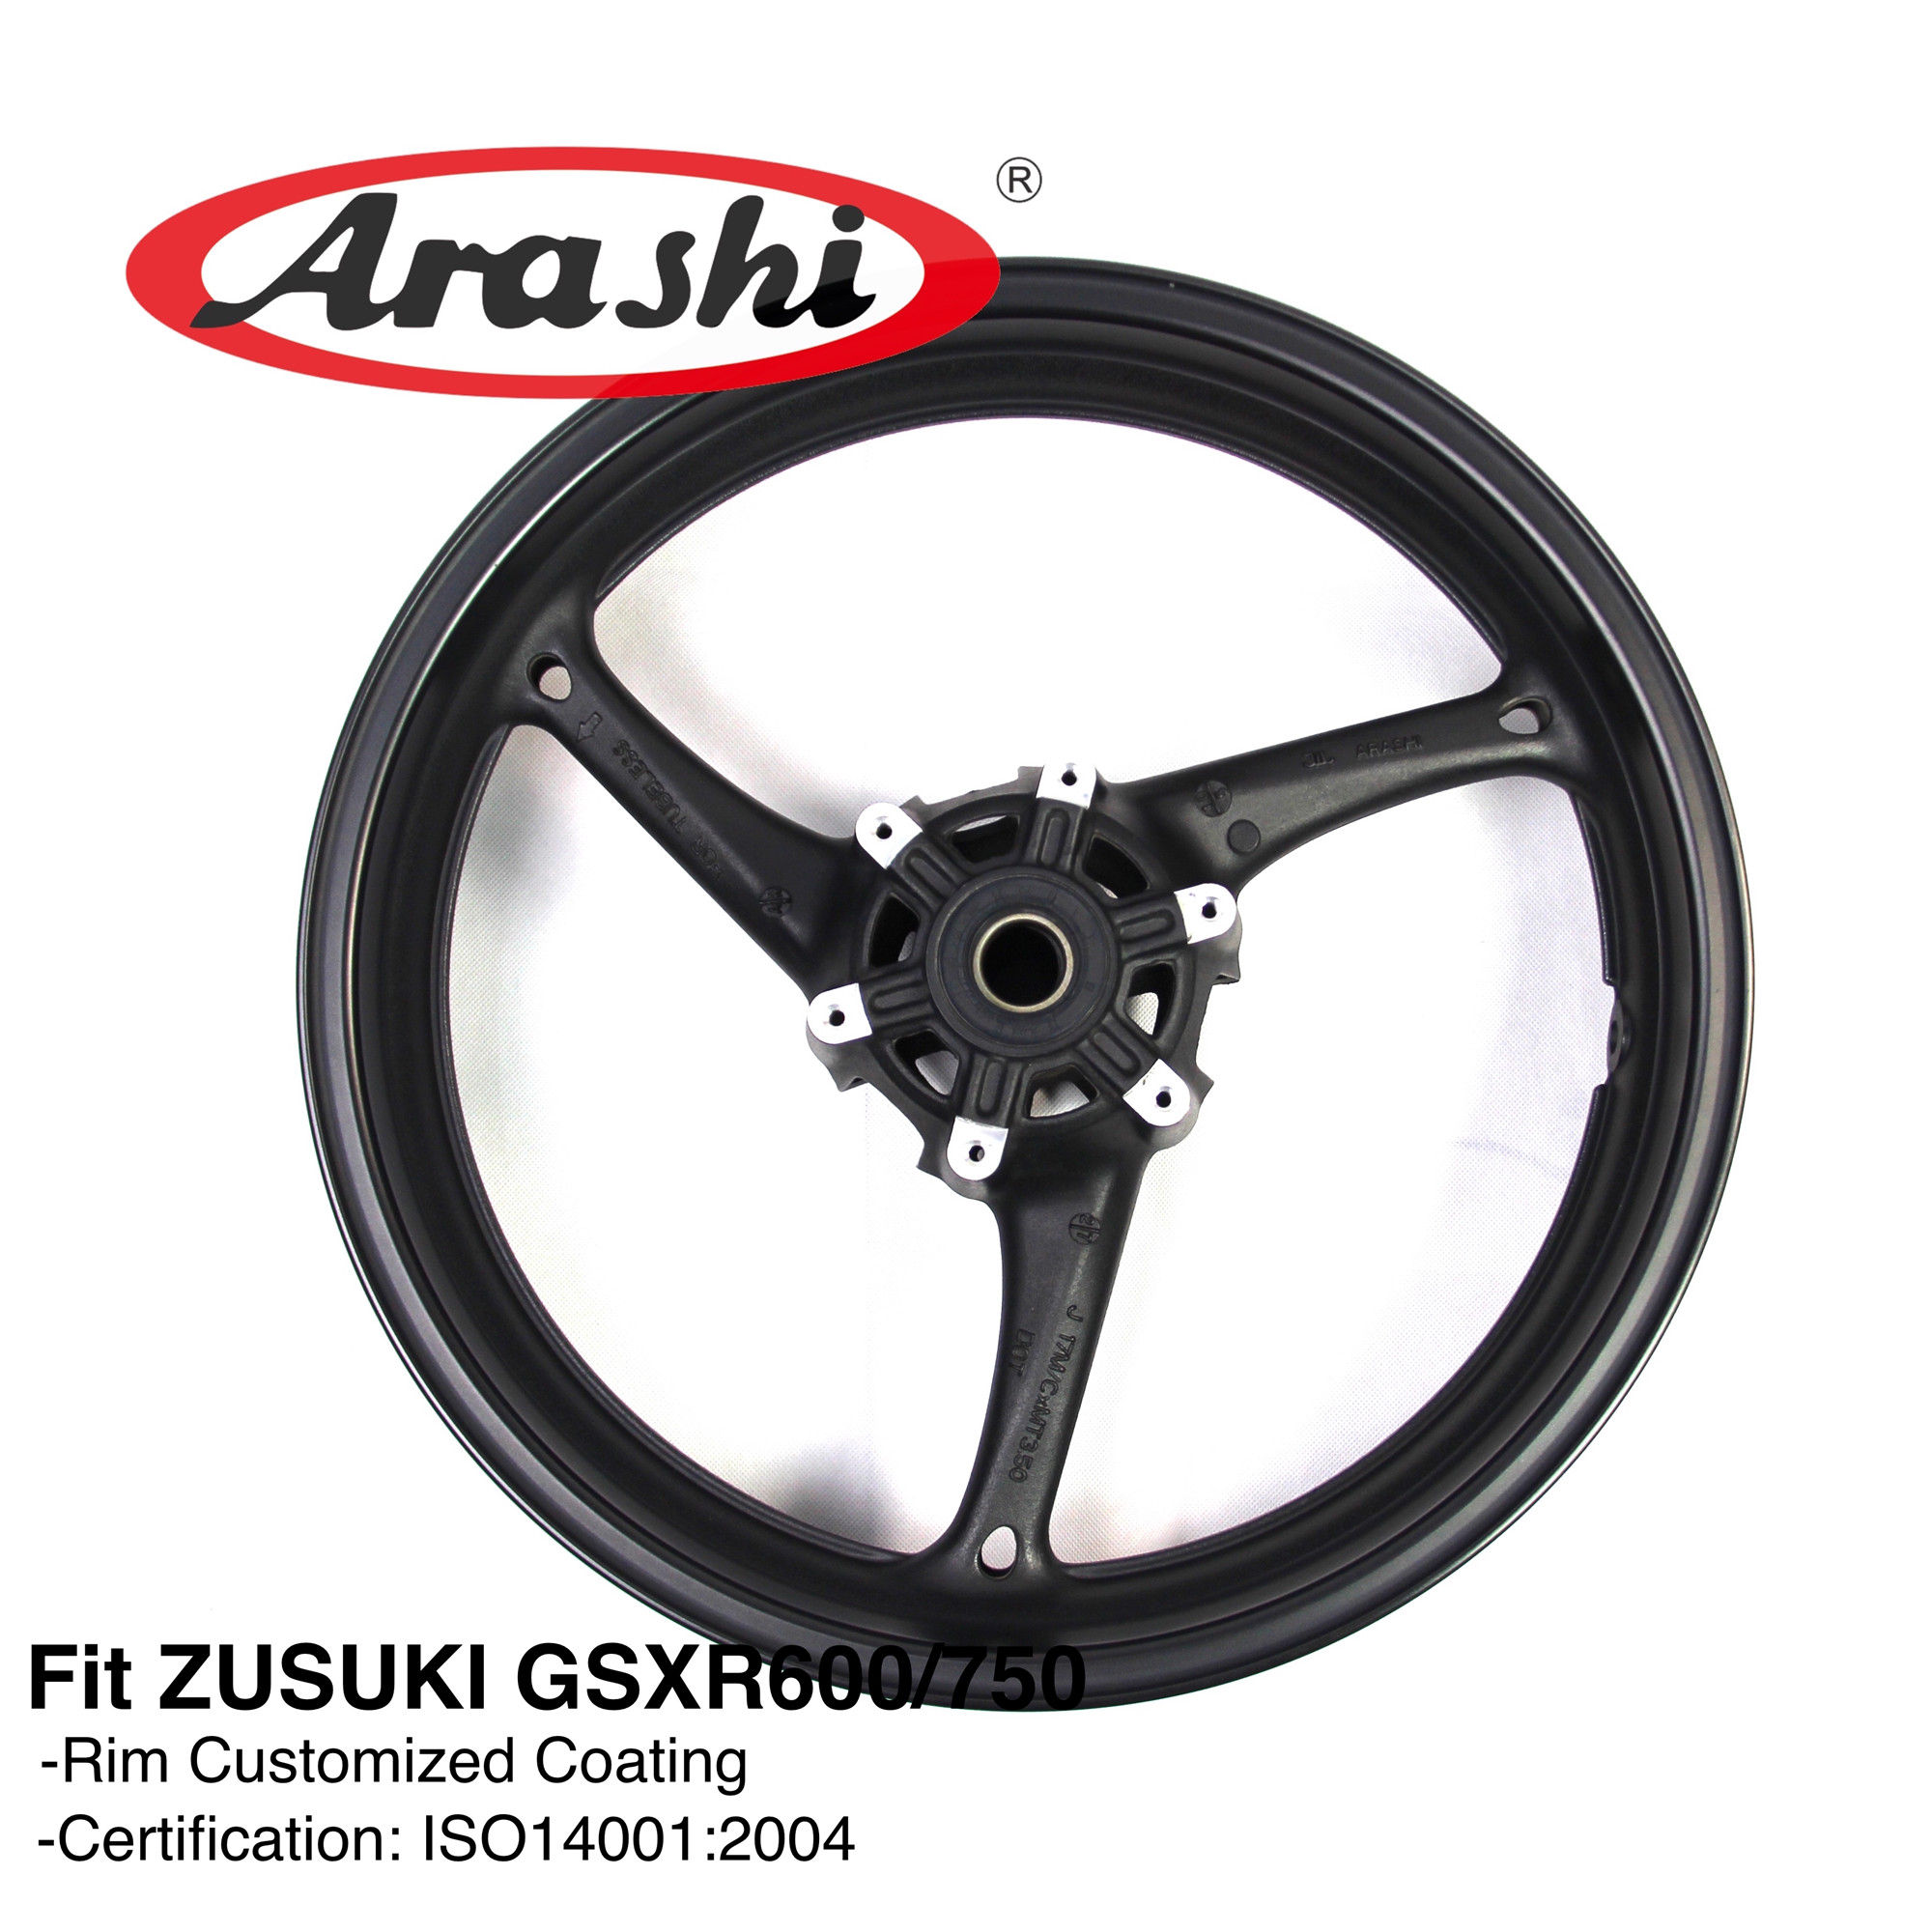 

Arashi For Suzuki GSXR 600 750 2011 - 2016 Front Wheel Rim Motorcycle Accessories GSX R GSX-R GSXR600 GSXR750 2012 2013 2014 2015